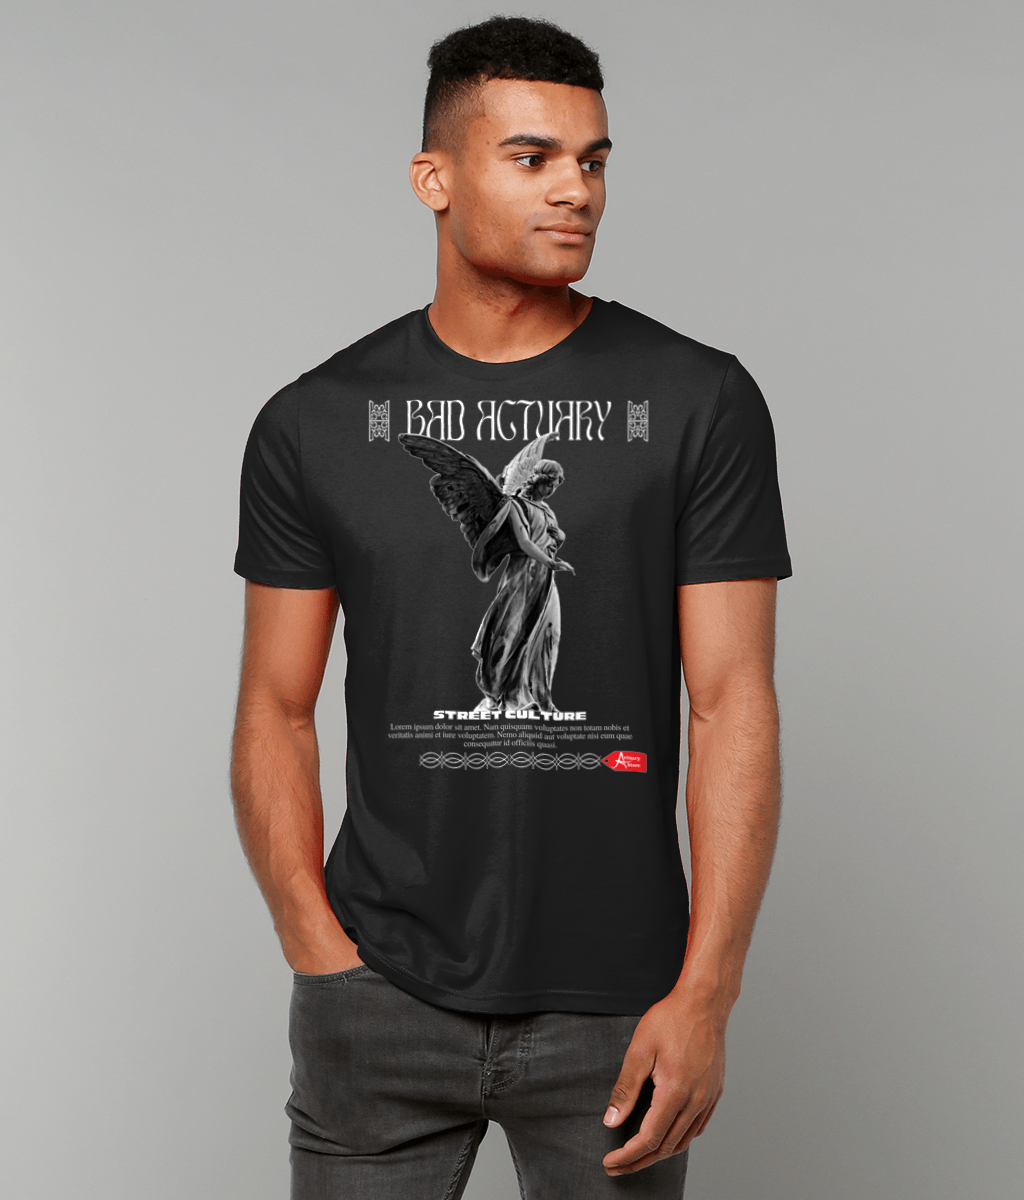 Bad Actuary Streetwear Black T-Shirt